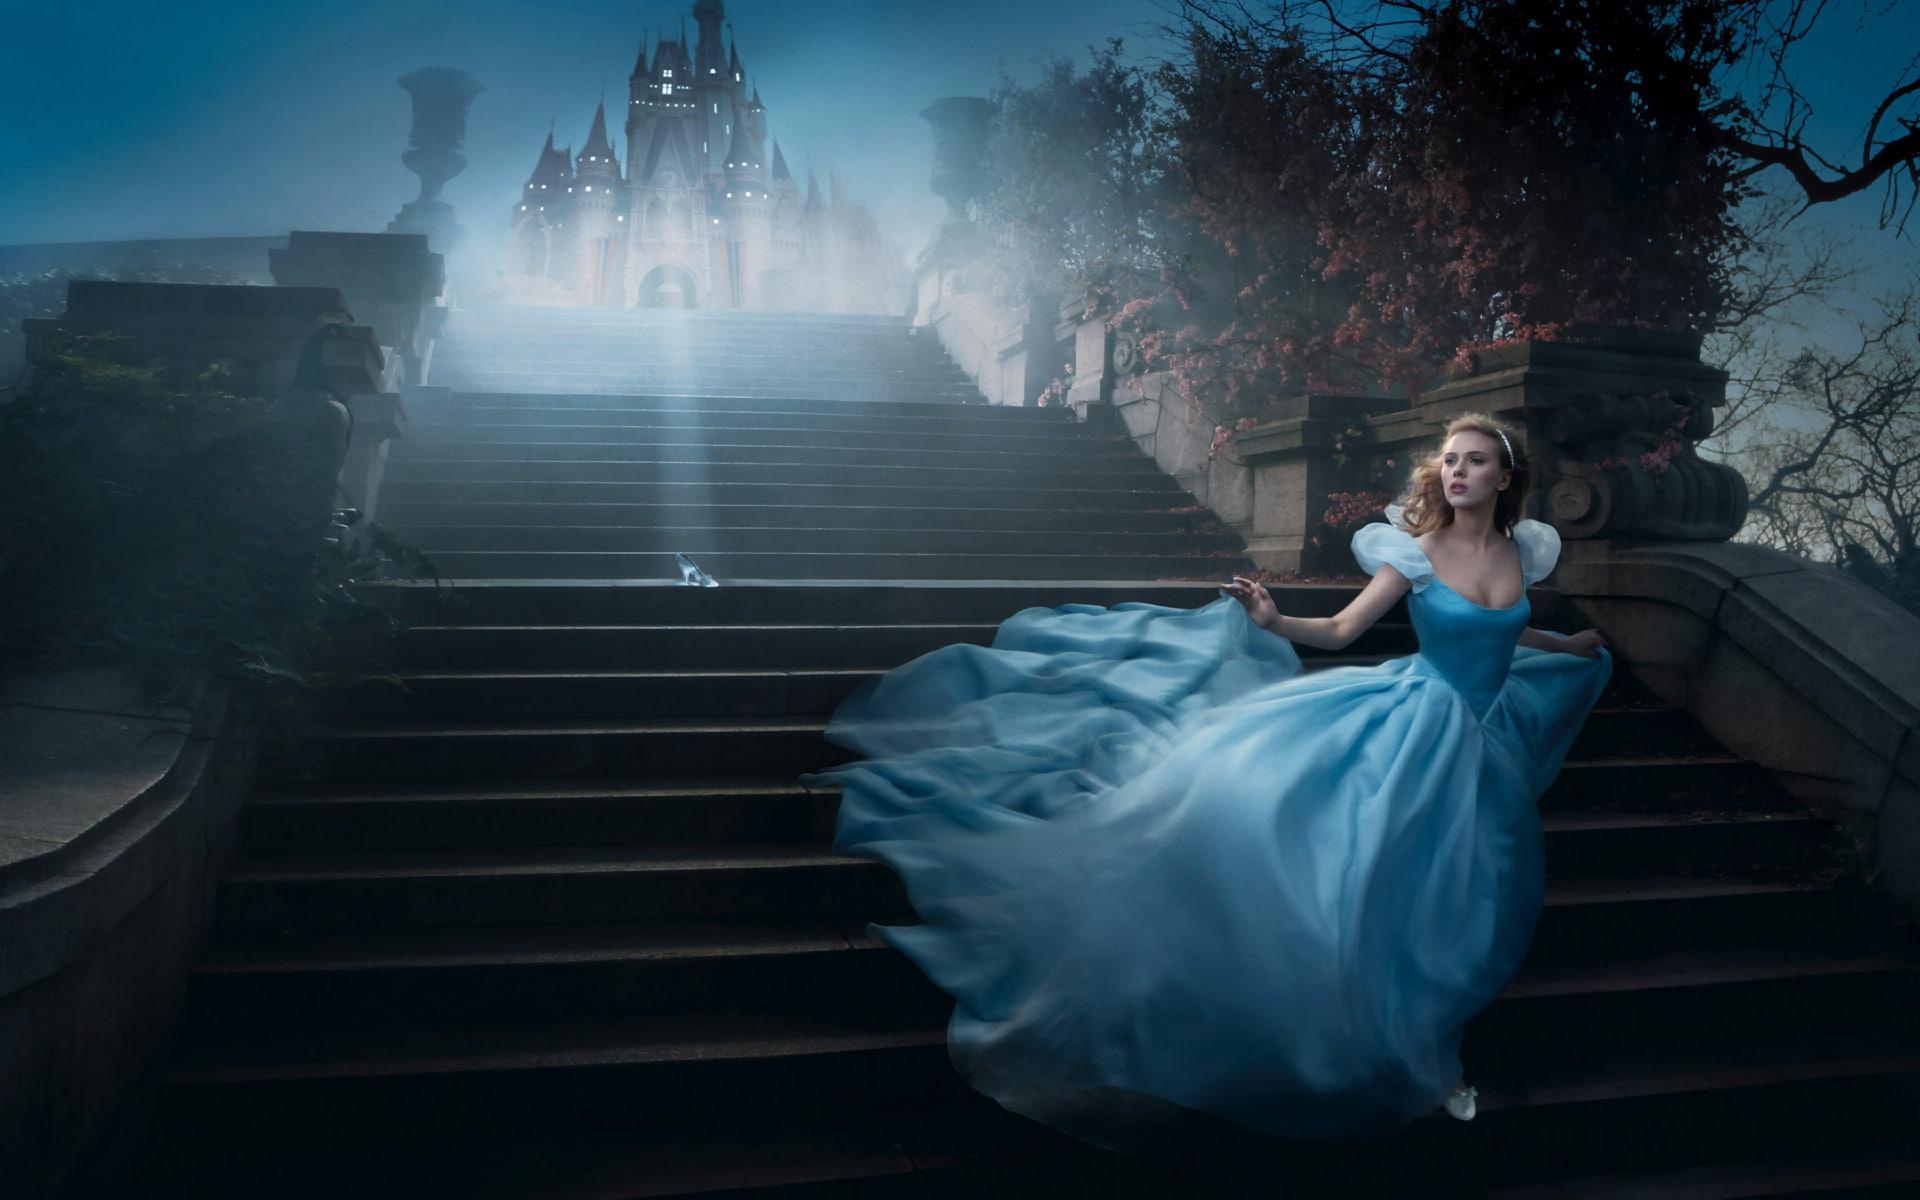 HD wallpaper: Cinderella Five Minutes Until 12 Am At Midnight Love